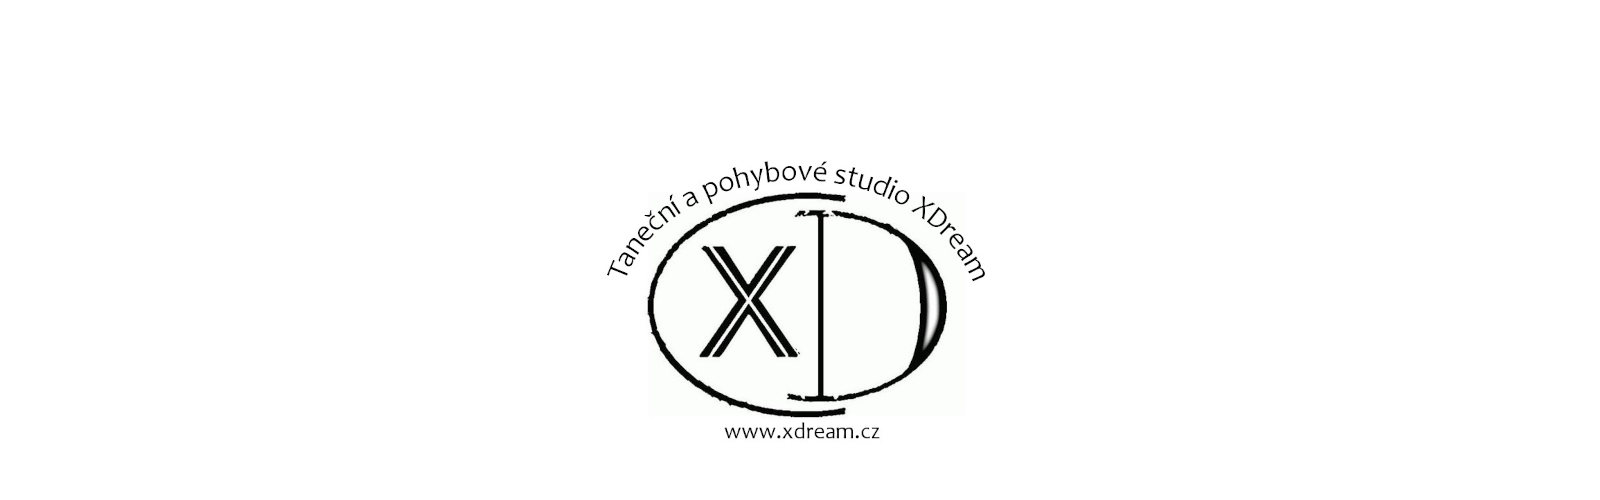 Logo XDream taneční a pohybové studio